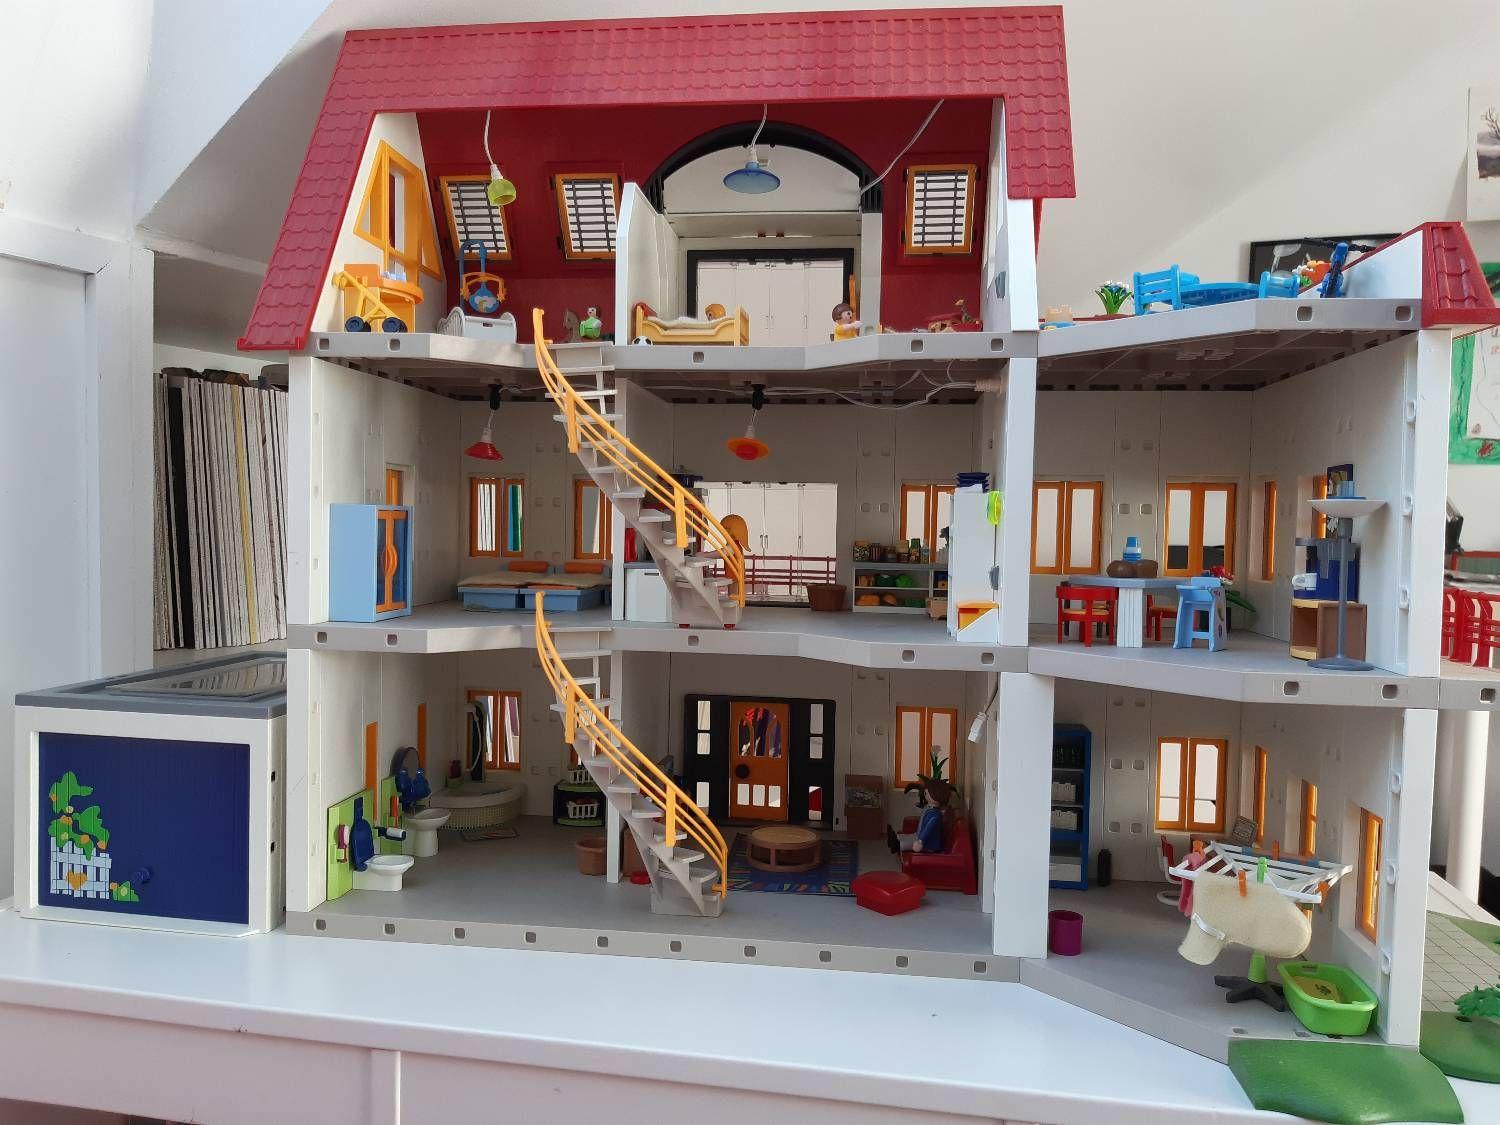 Playmobil Villa moderne avec étages - playmobil